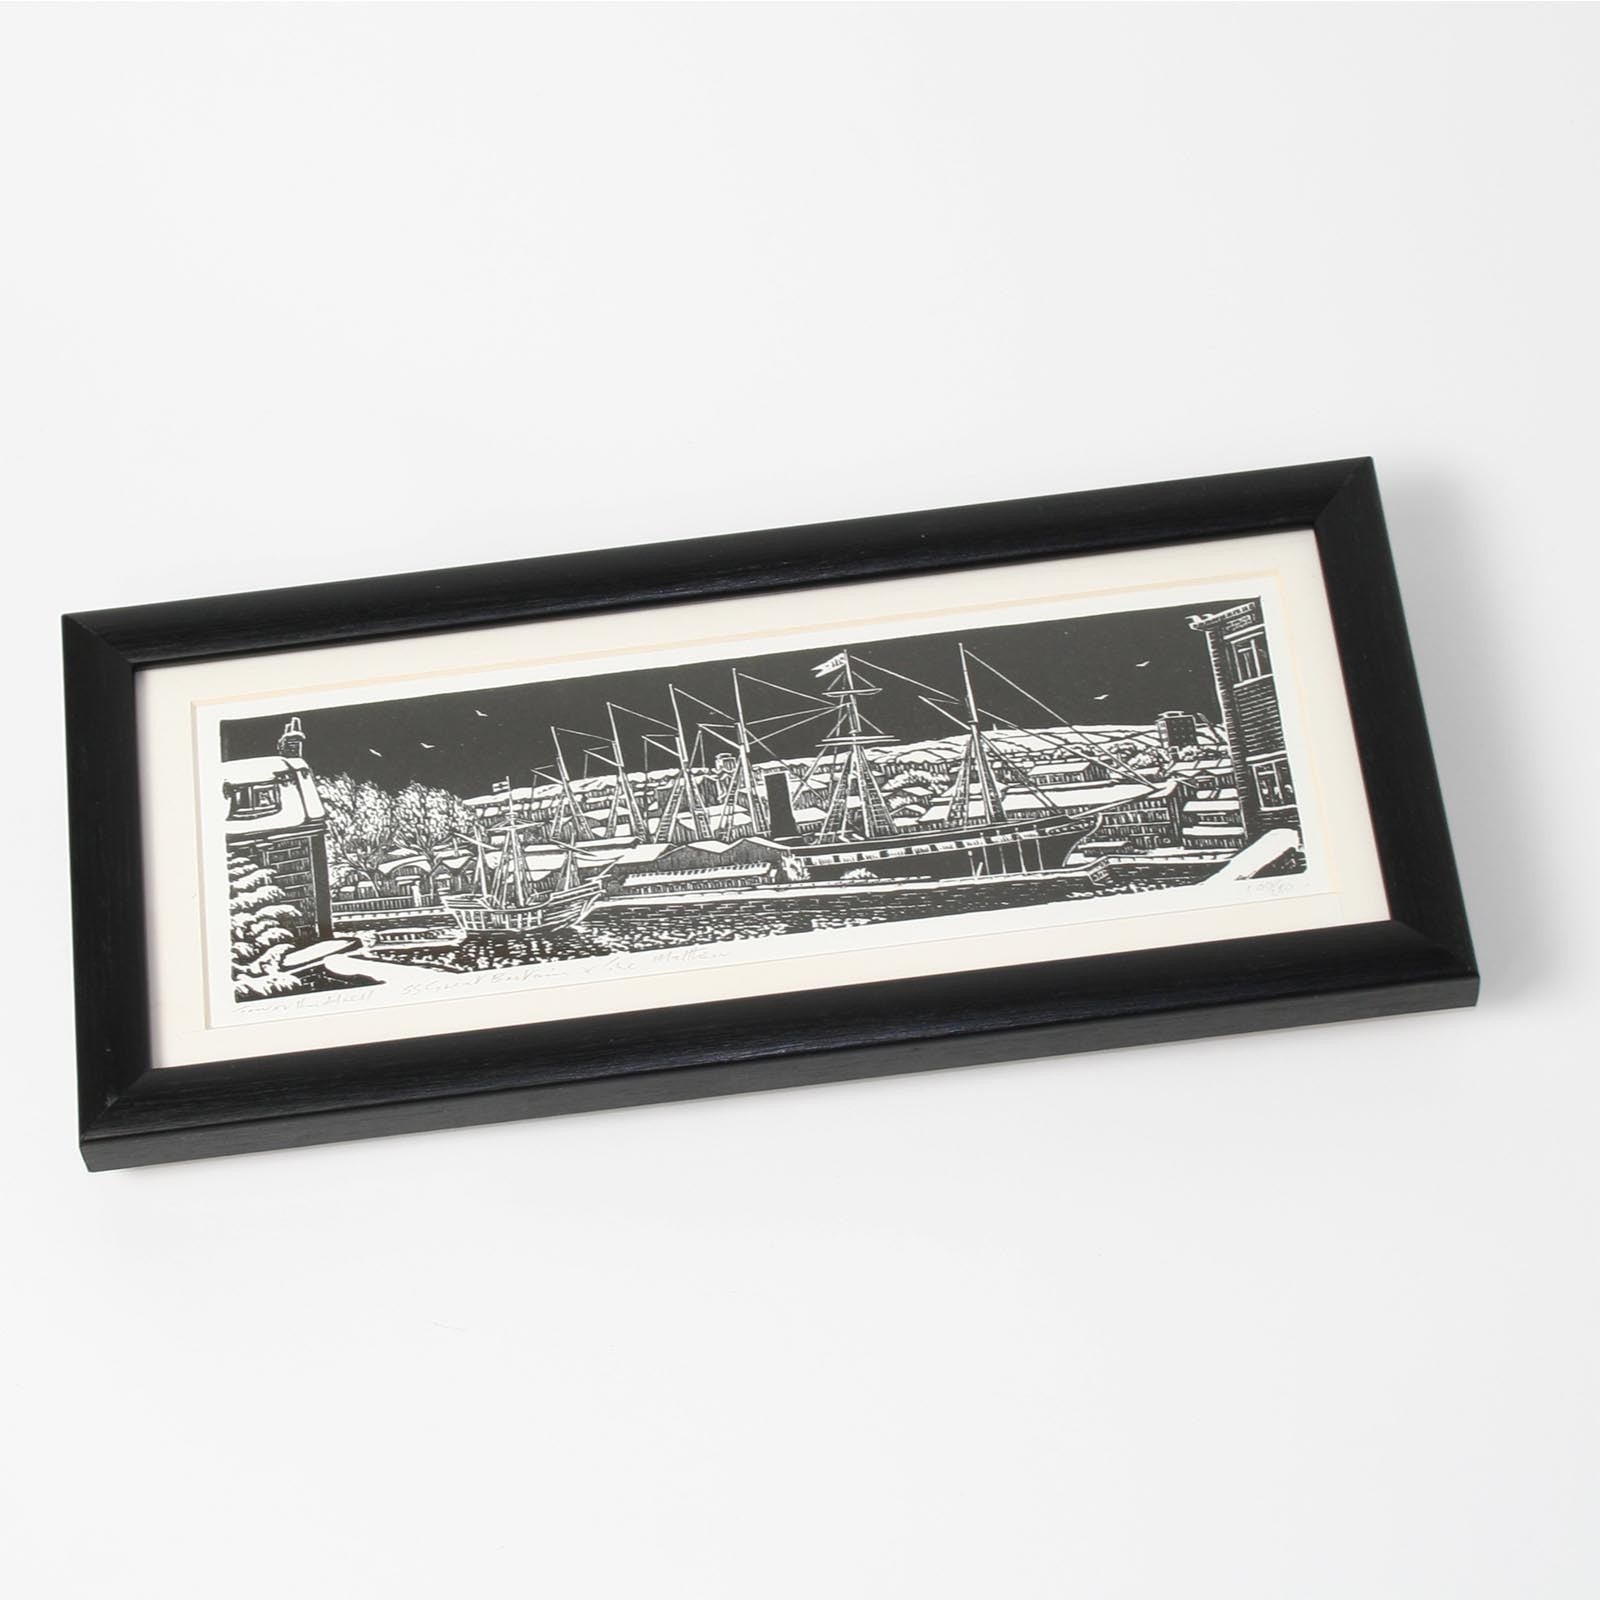 SS Great Britian Small Framed Print by Trevor Haddrell